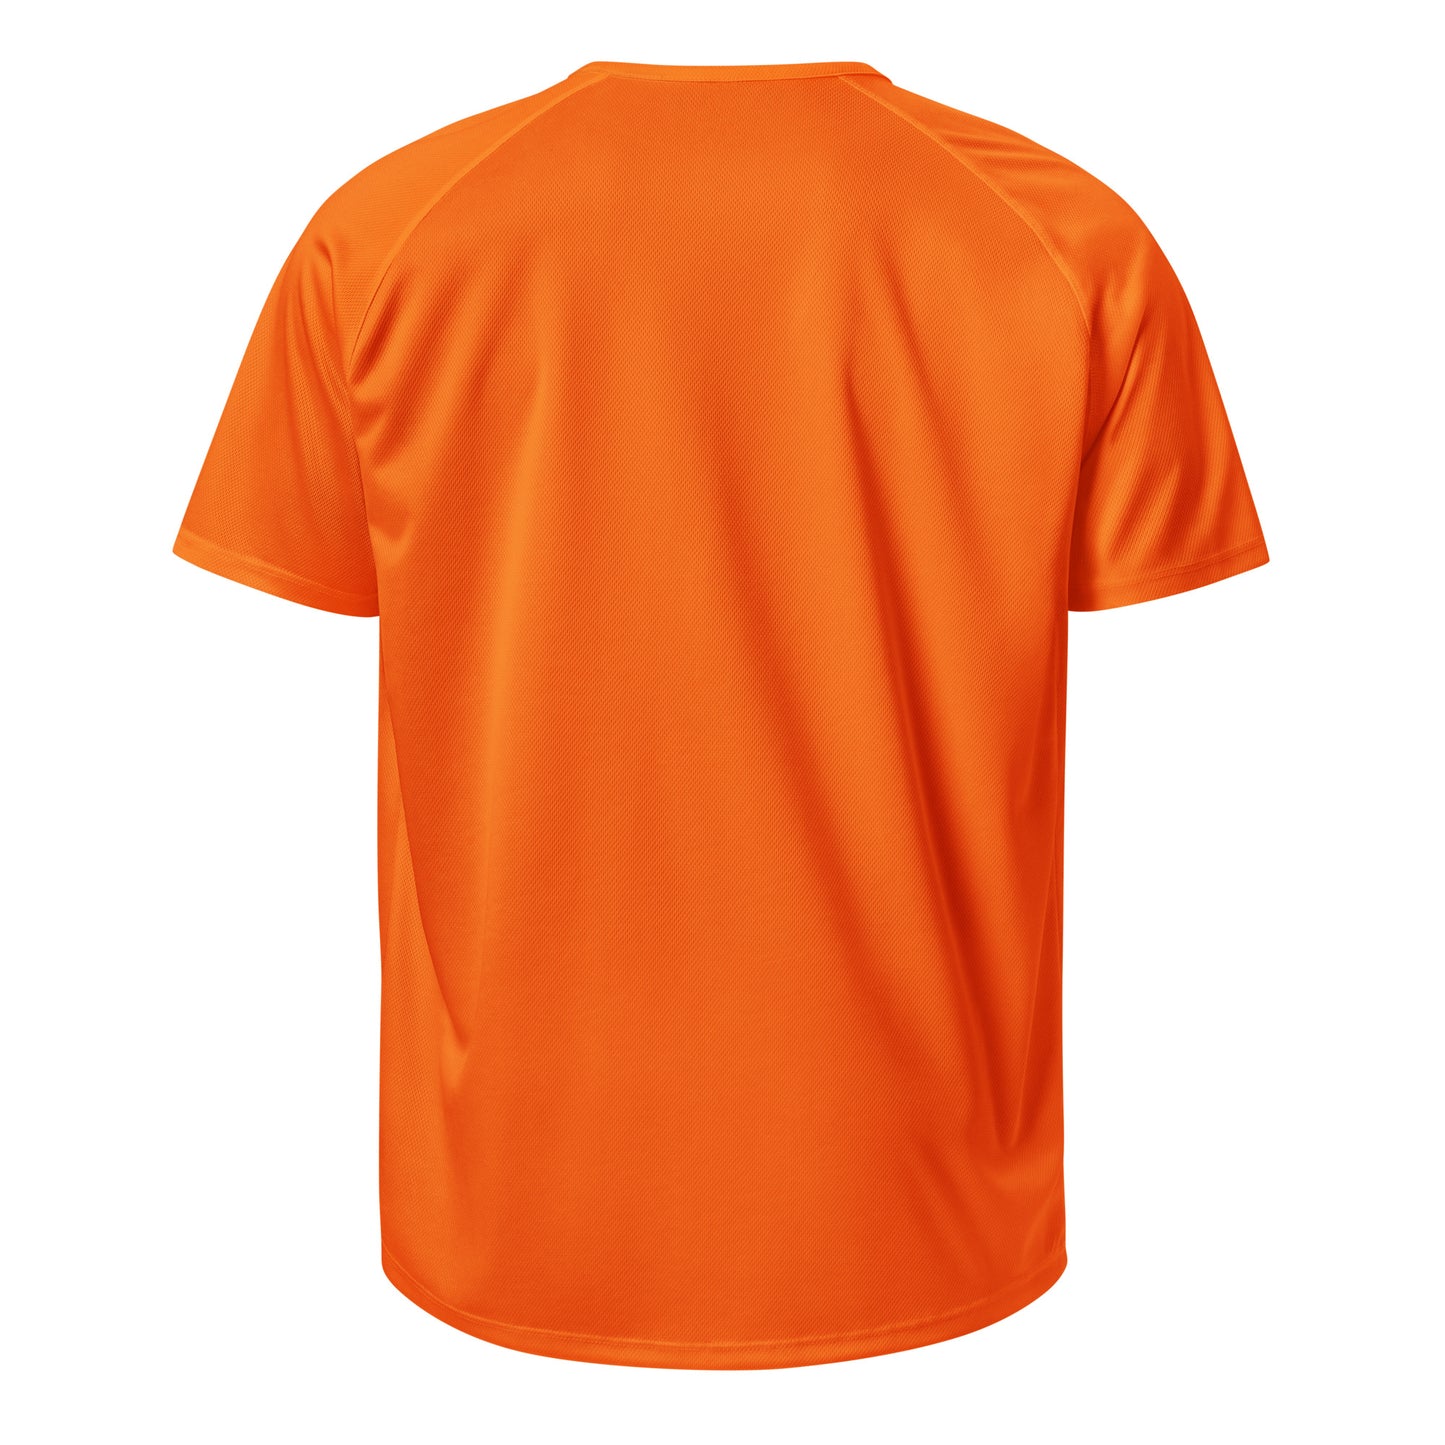 M102 - T-shirt/Sports/Breathable Fabric (Pony : Orange)